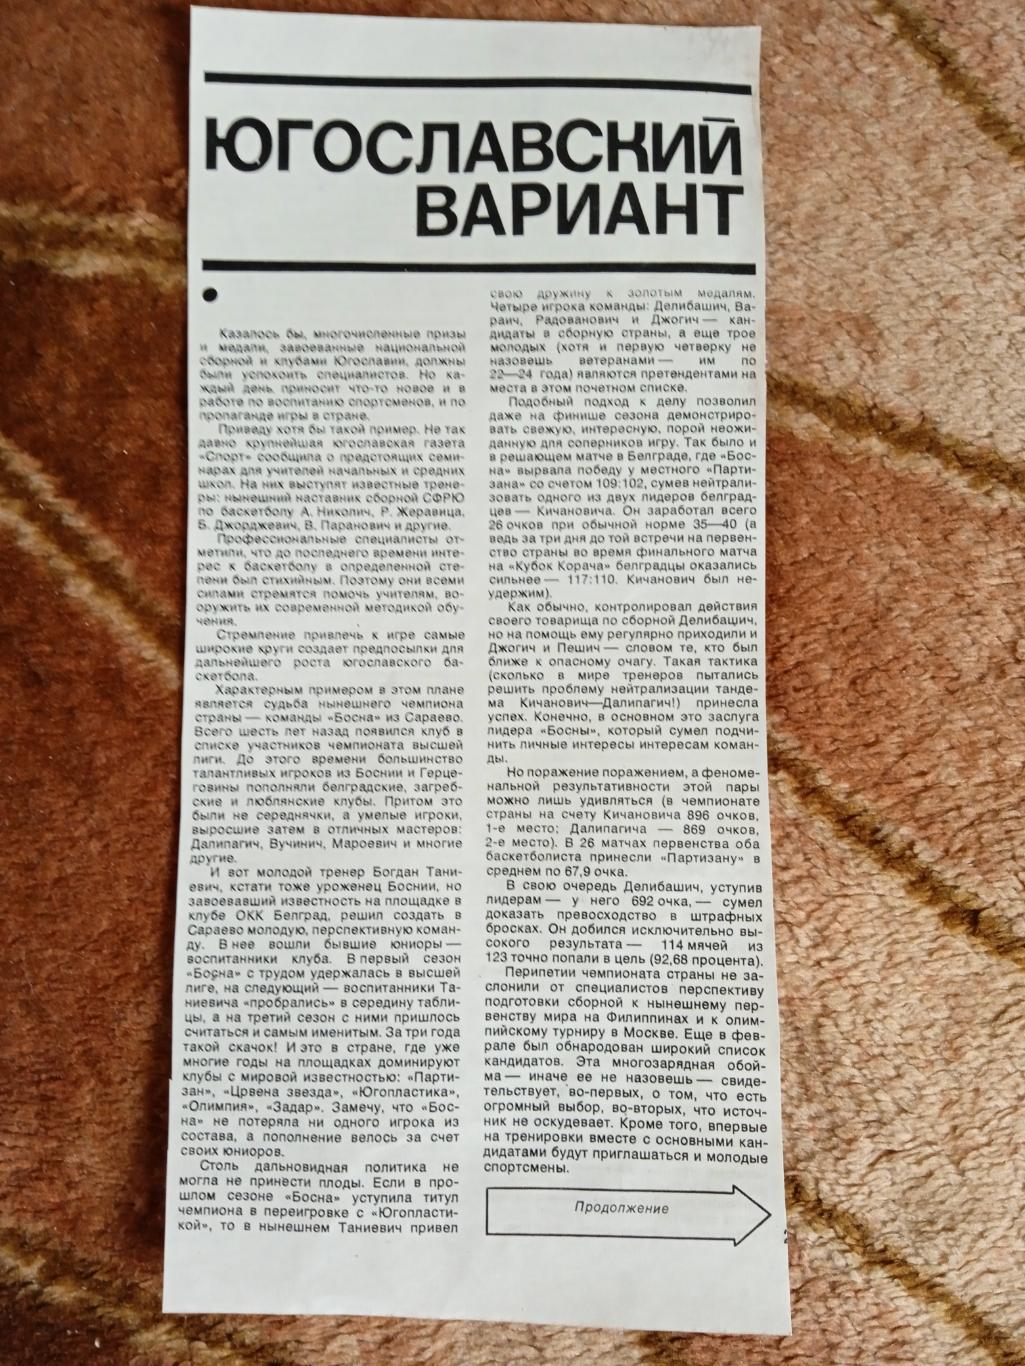 Статья.Фото.Баскетбол.Югославский вариант.Журнал СИ 1978.